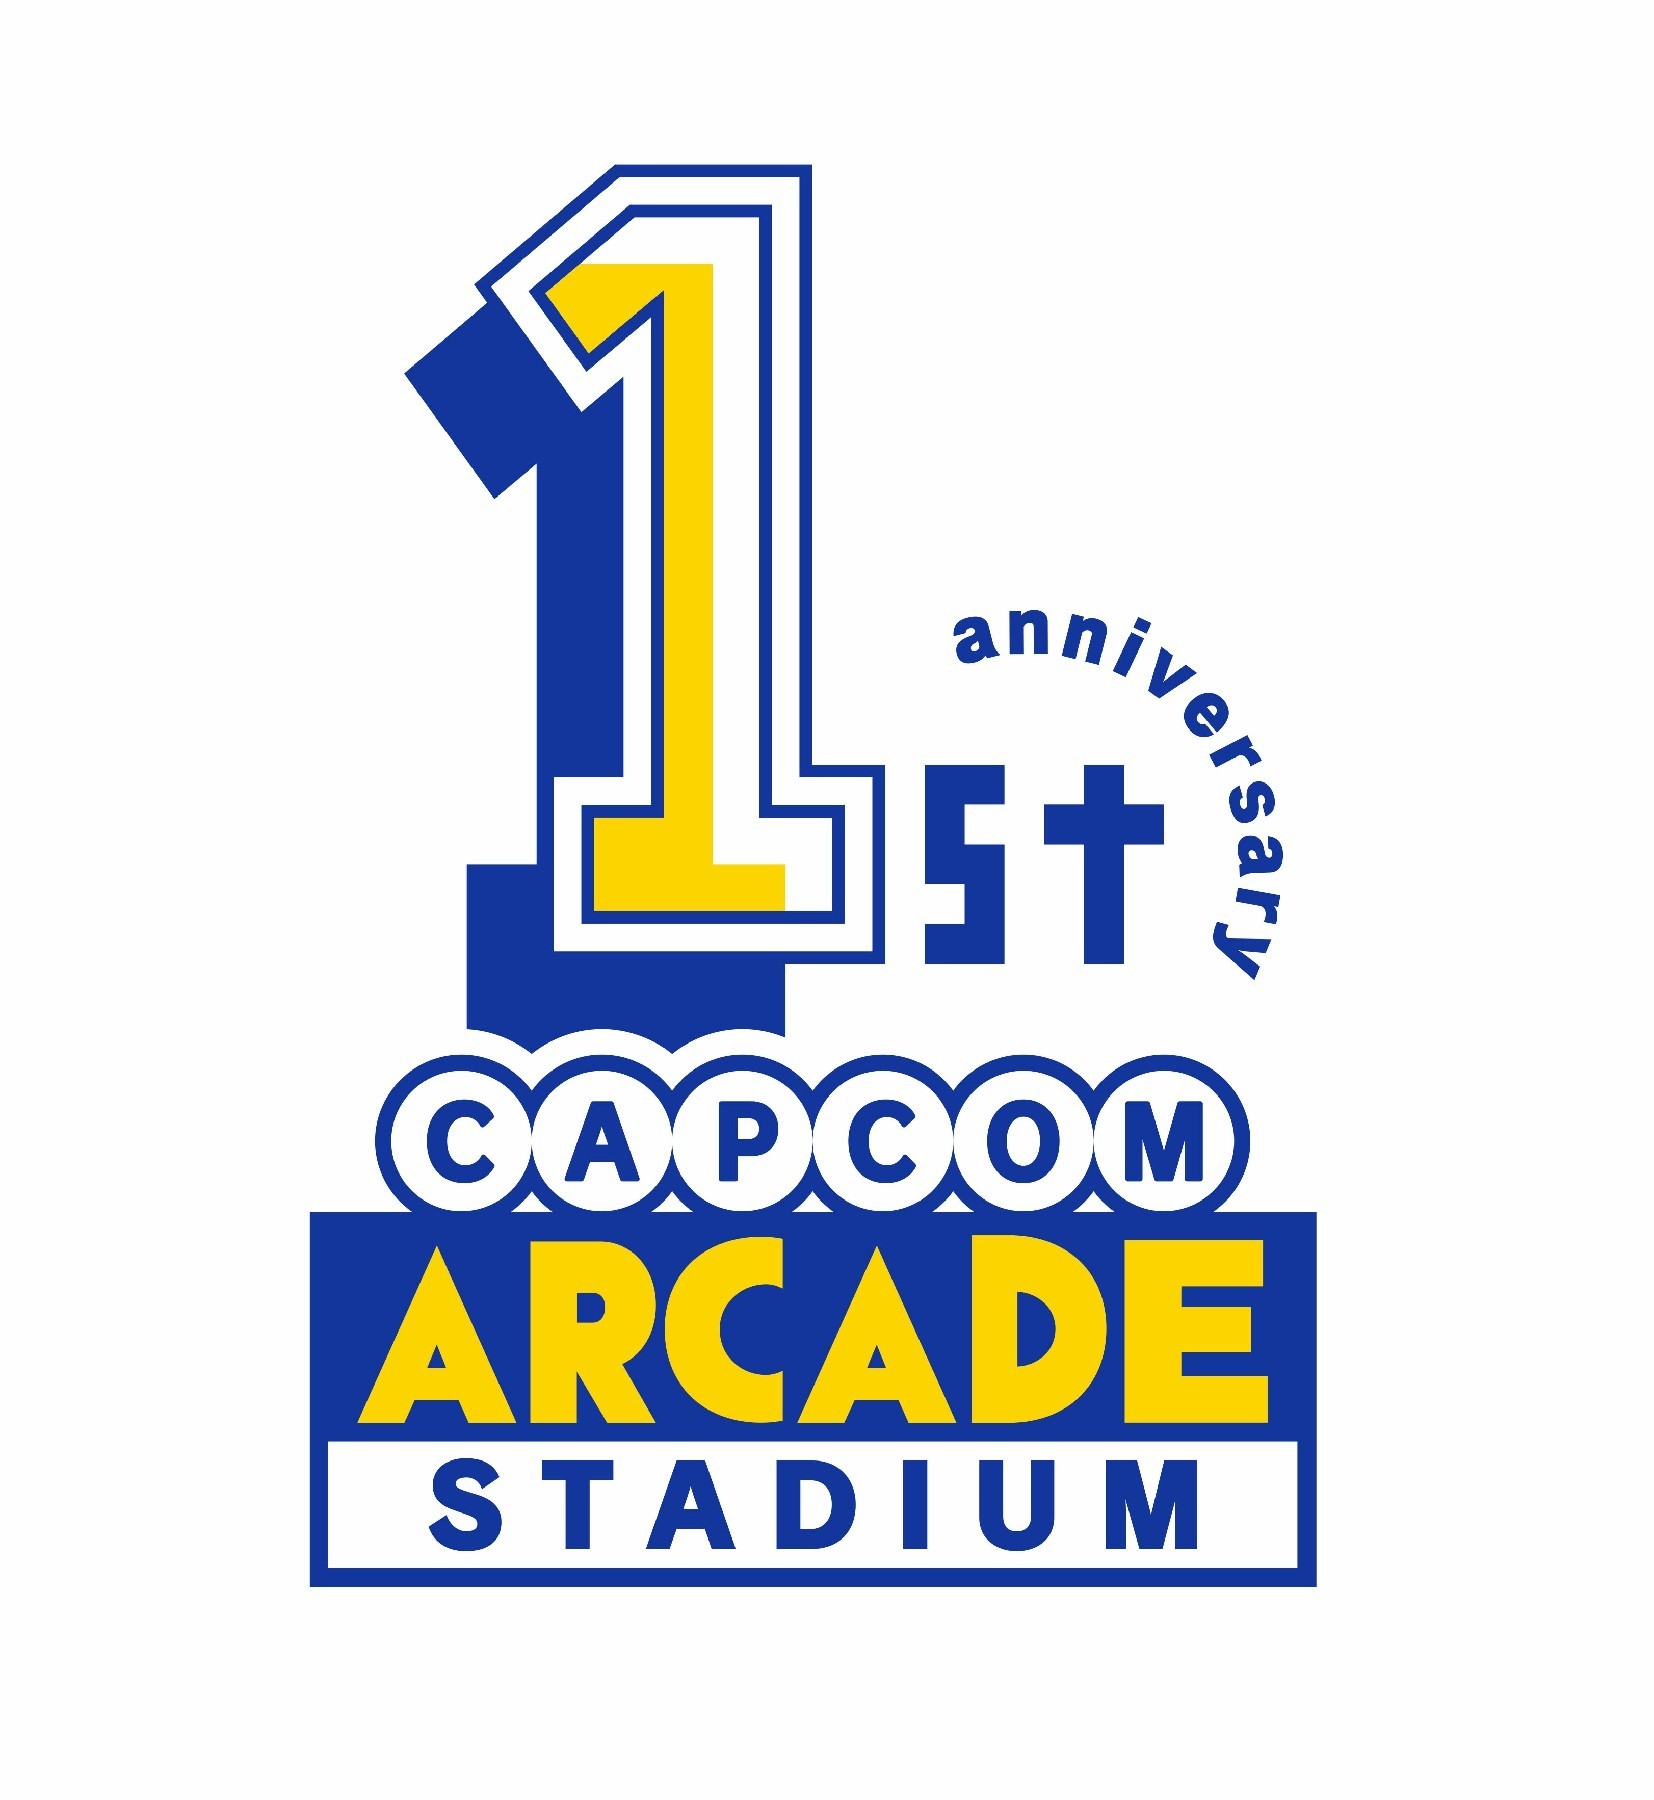 CAPCOM 经典大型电玩合辑第二弹《Capcom Arcade 2nd Stadium》7/22 登场